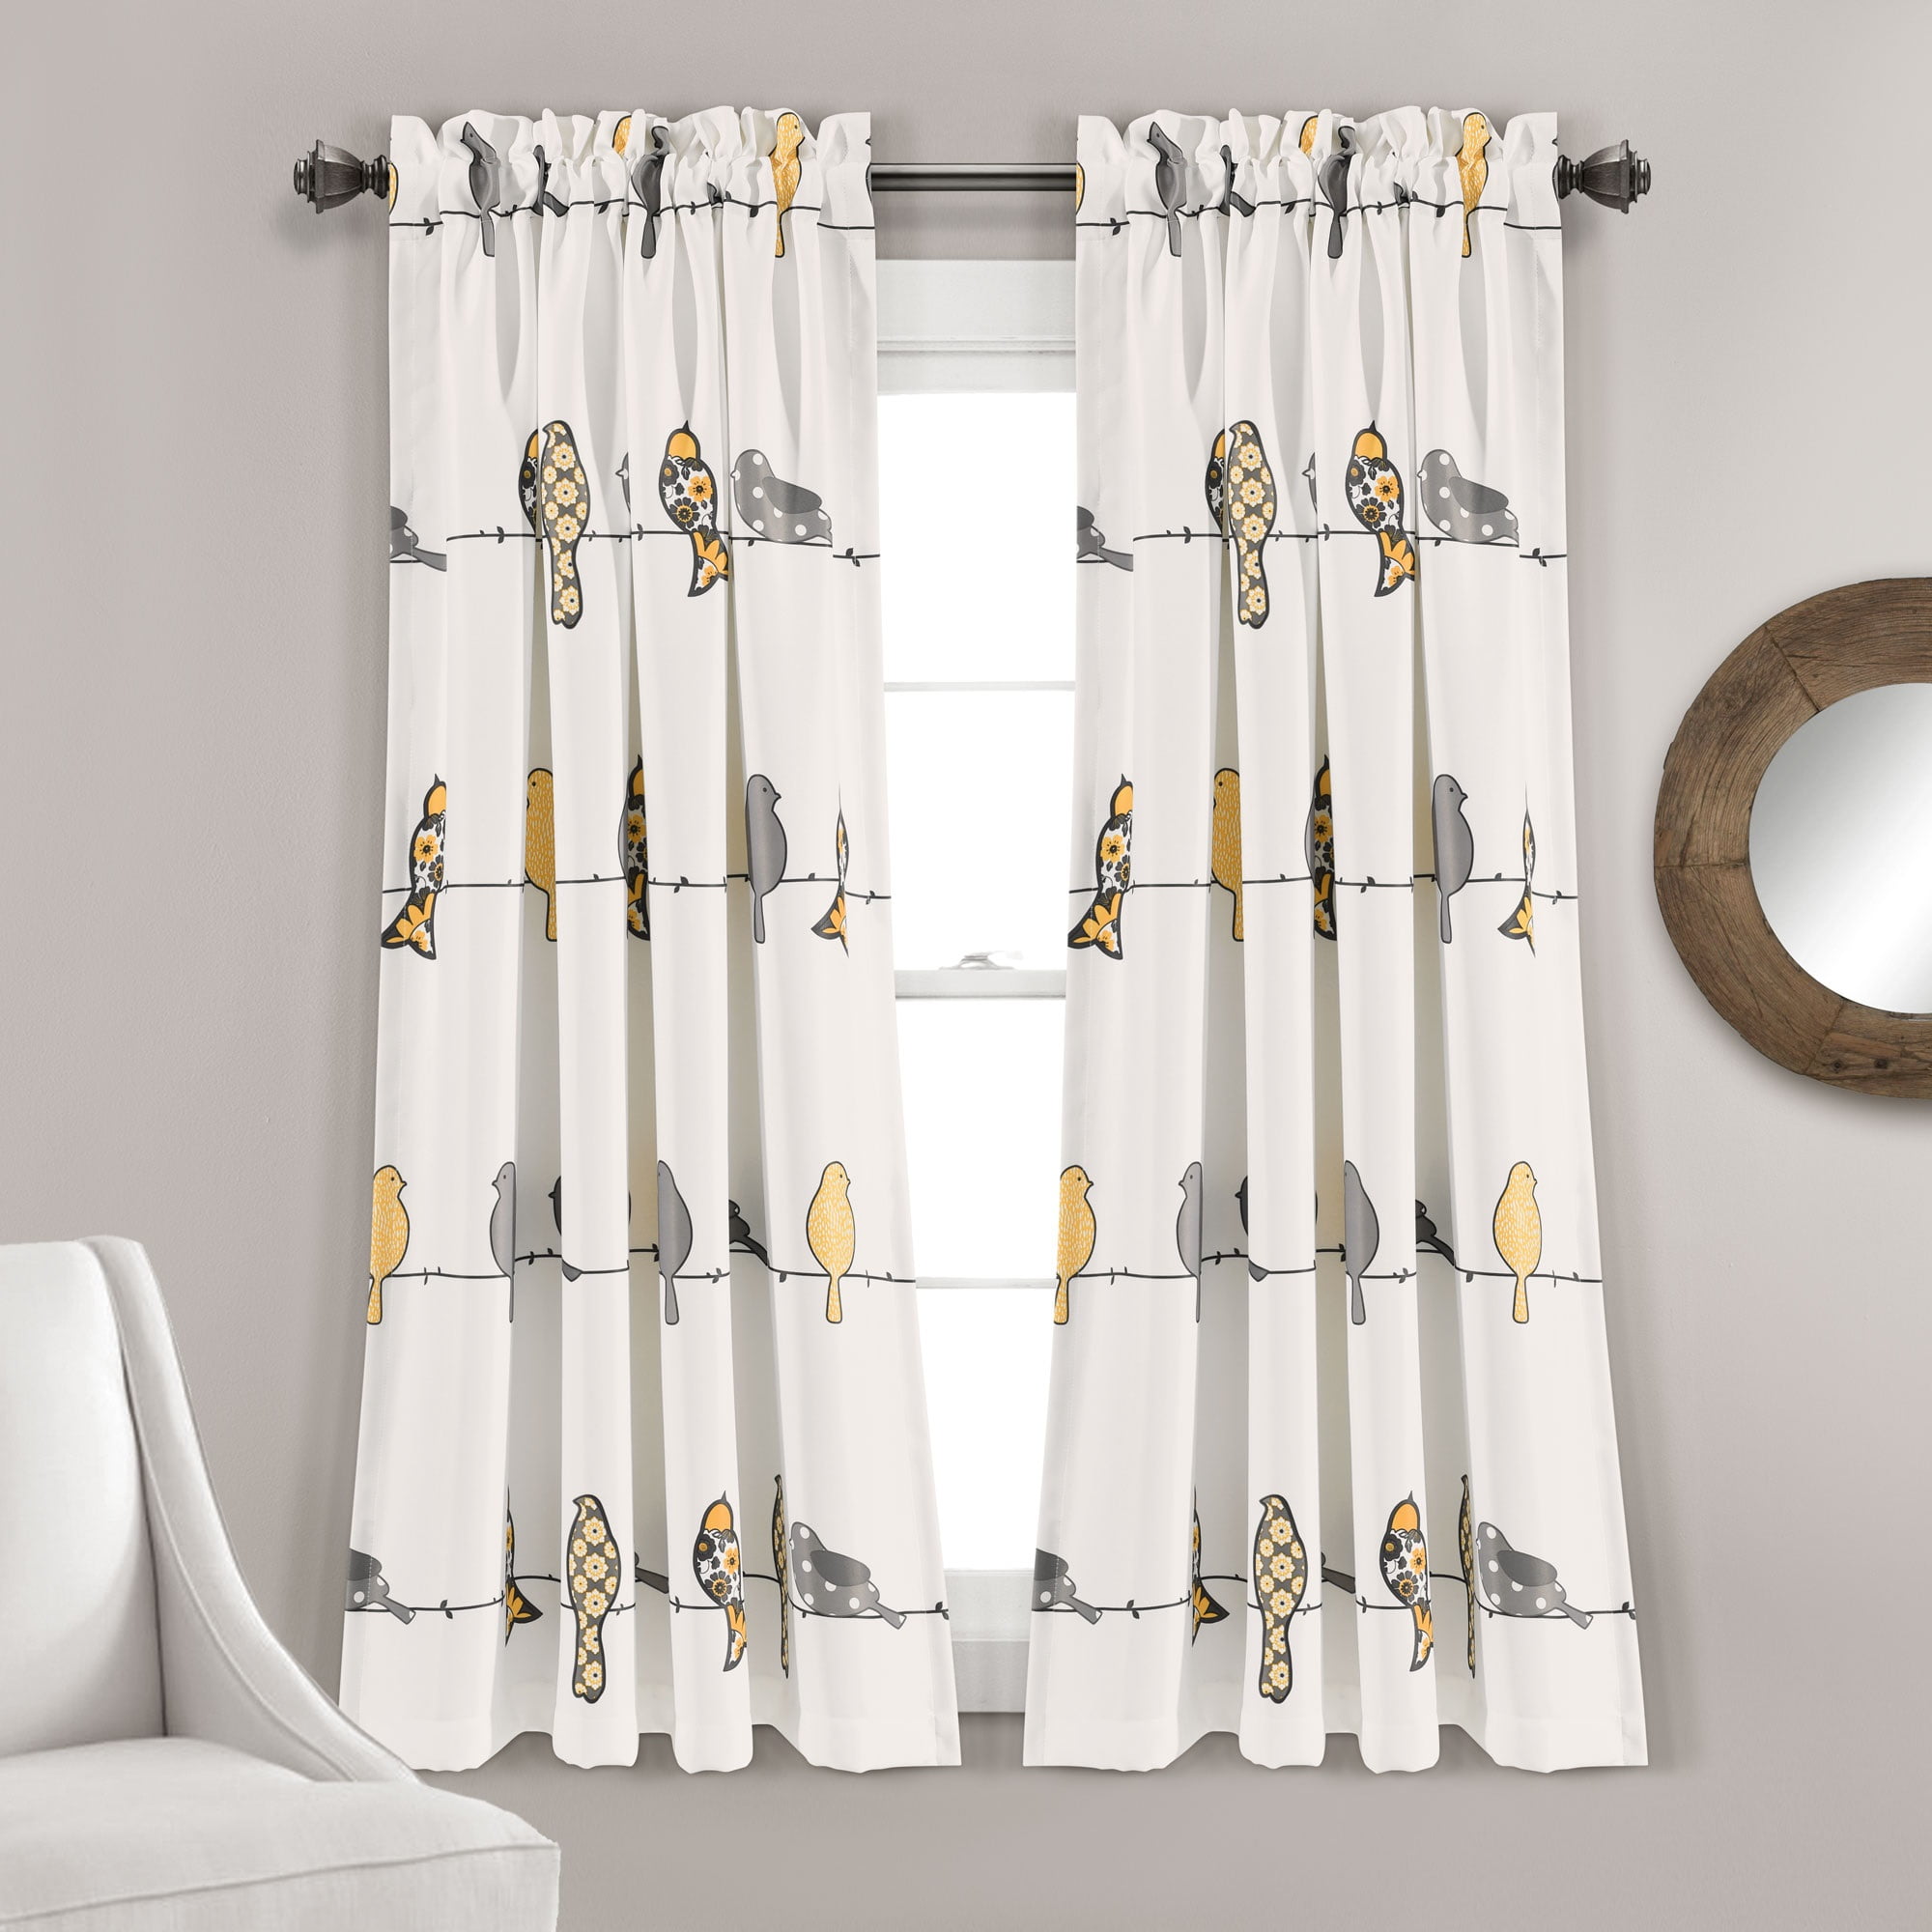 x Details about   Lush Decor Rowley Shower Curtain-Floral Animal Bird Print Design for Bathroom 